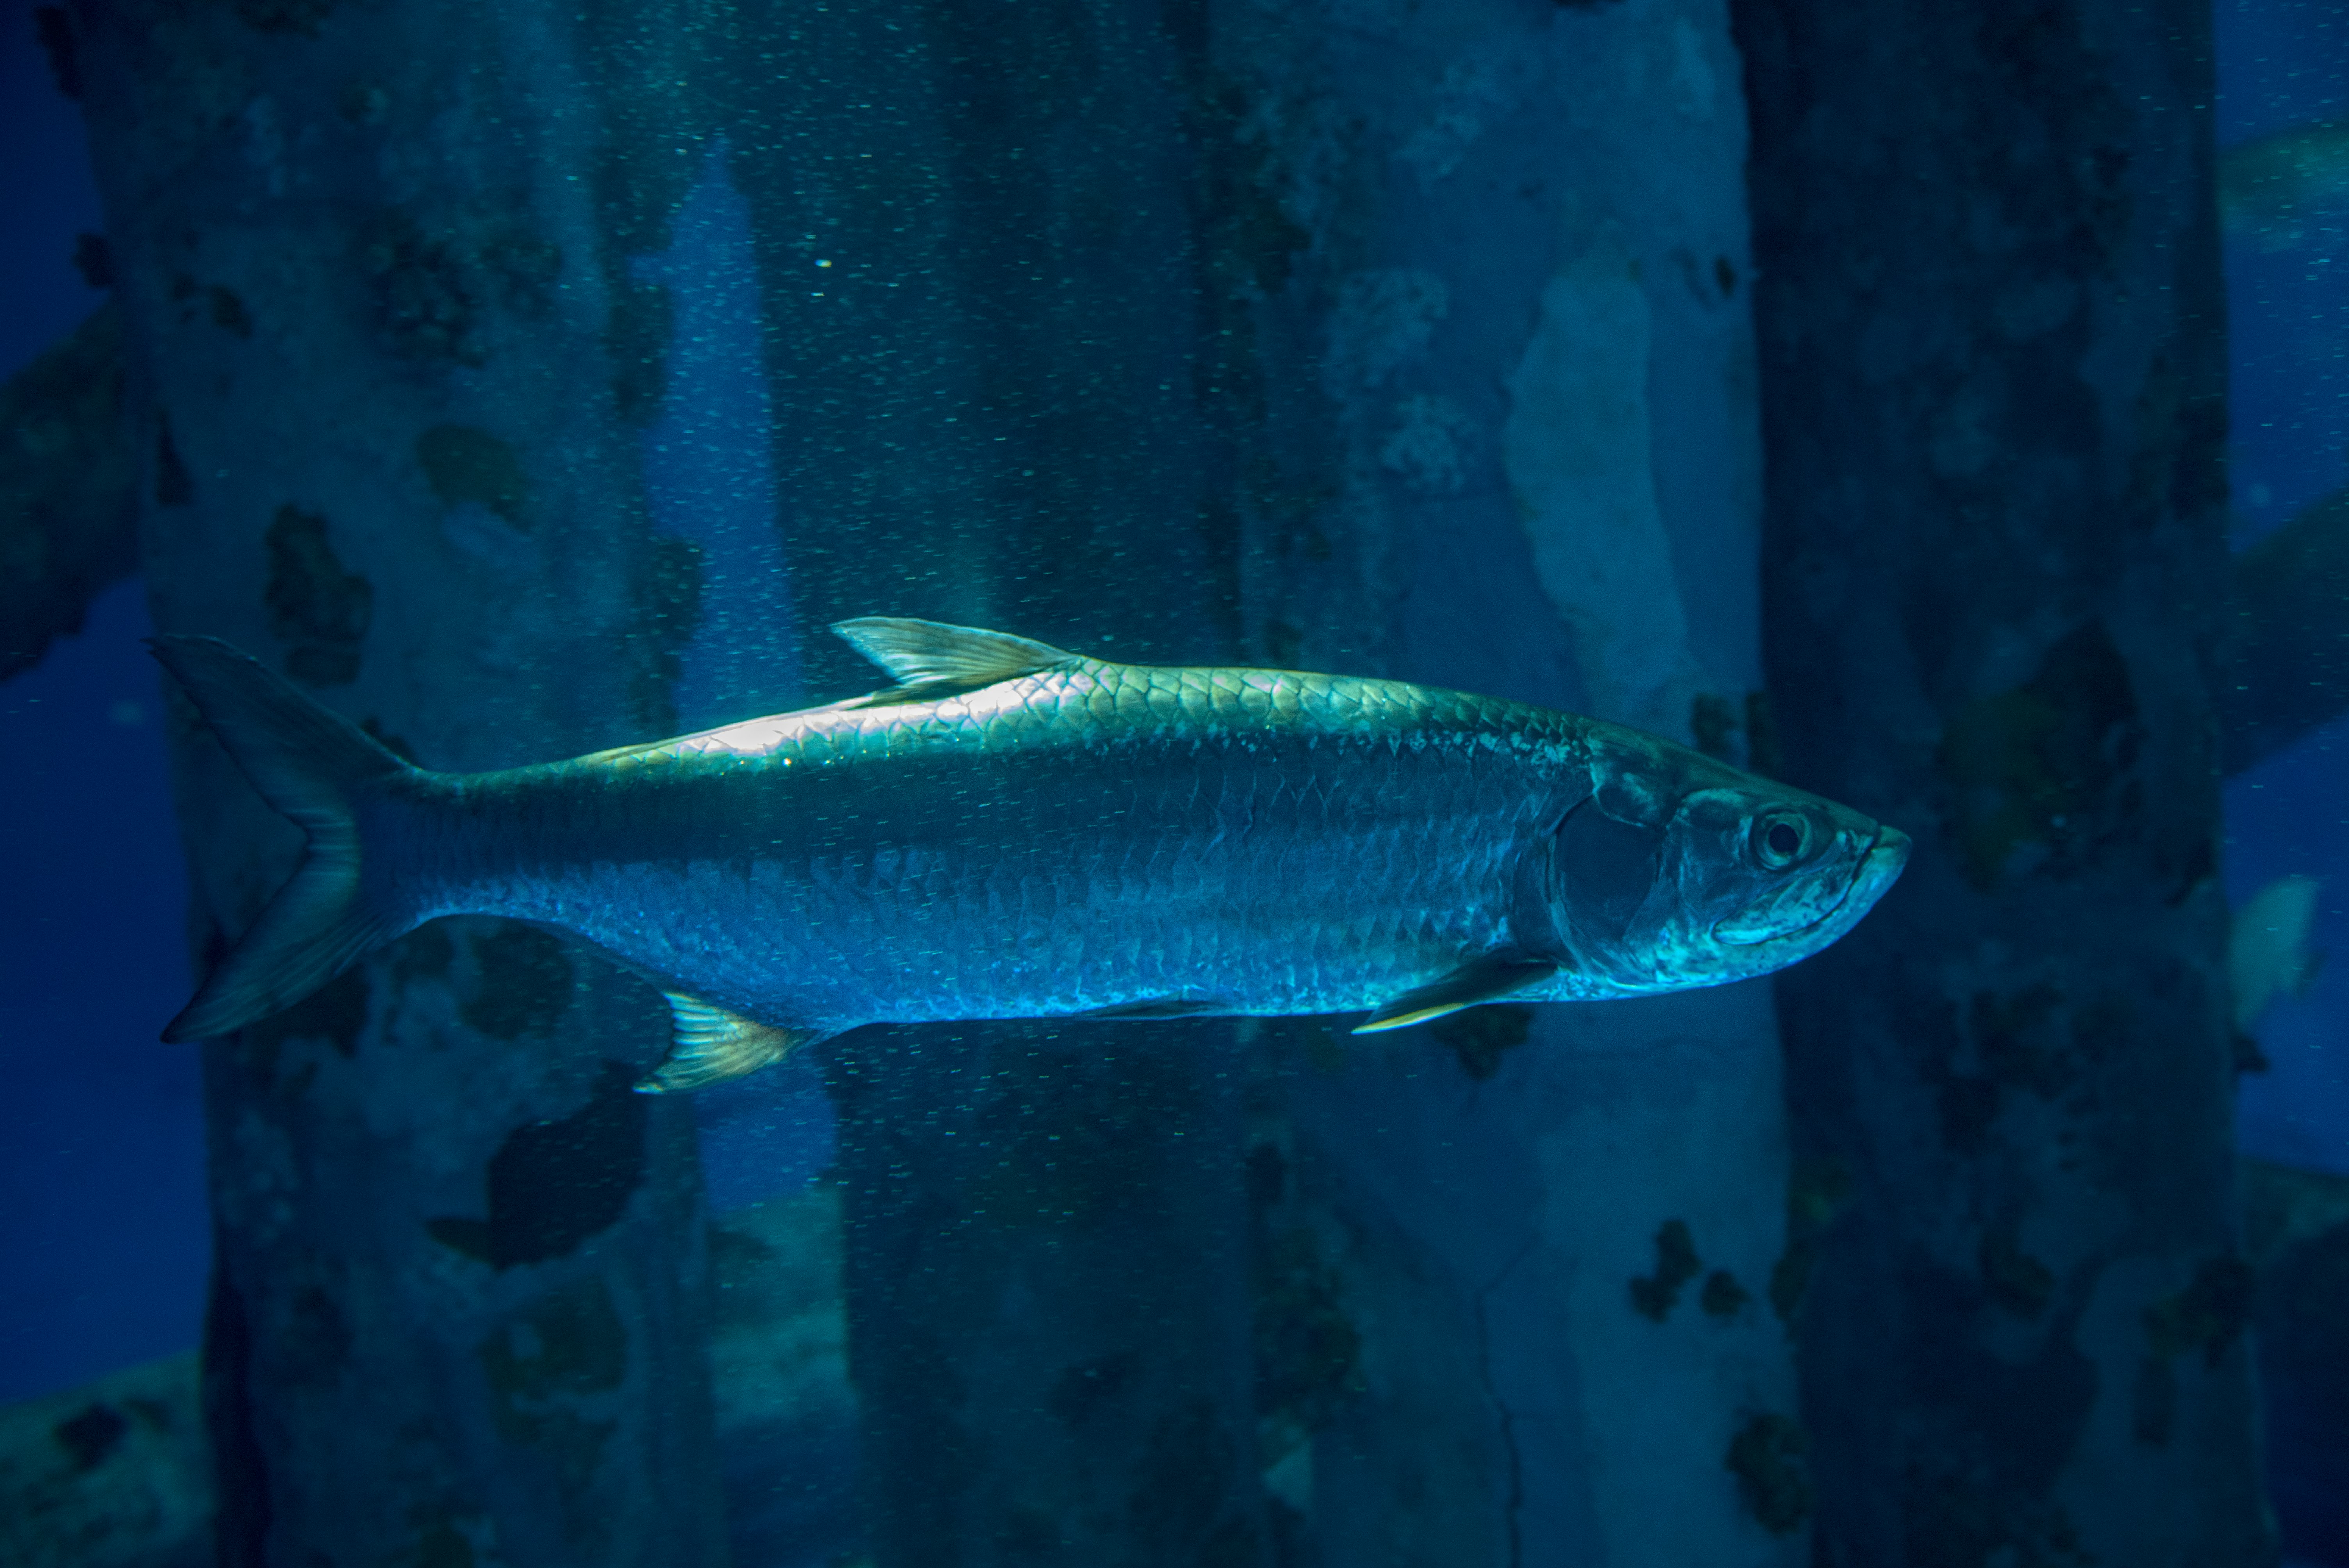 grey fish in fish tank